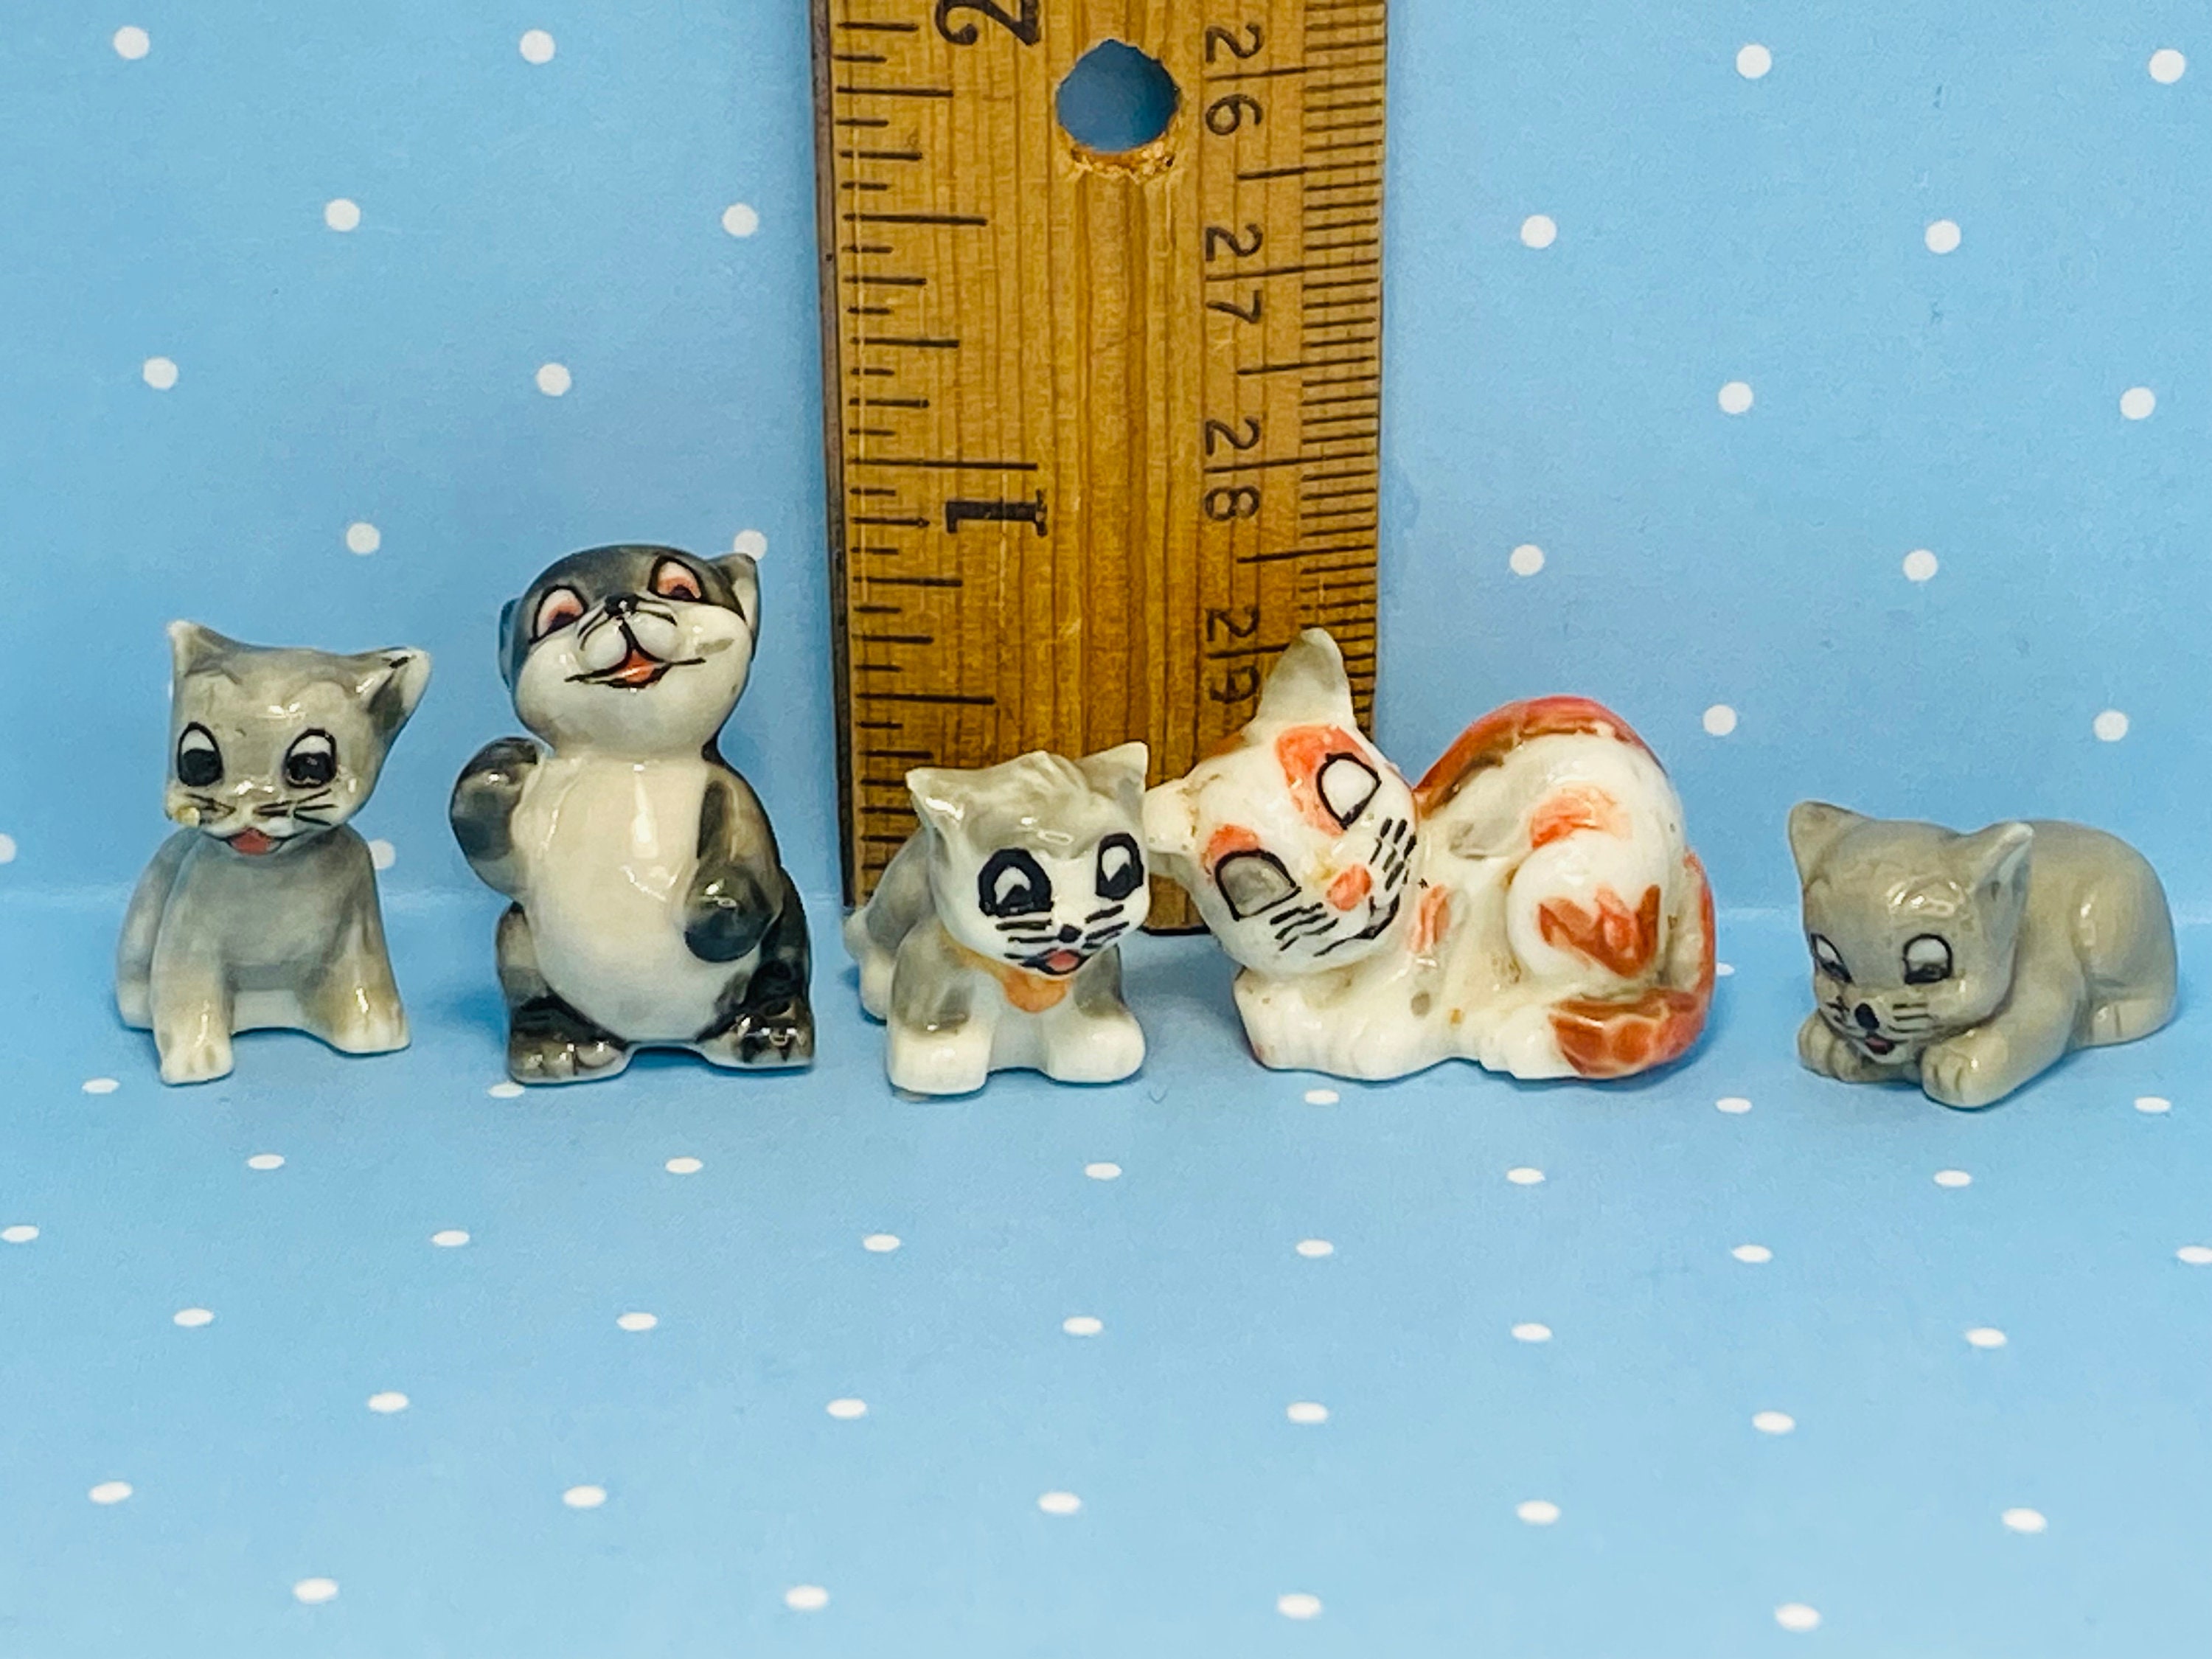 Orange Kitten 1:12 Scale Dollhouse Miniature Pet Adult Collectible